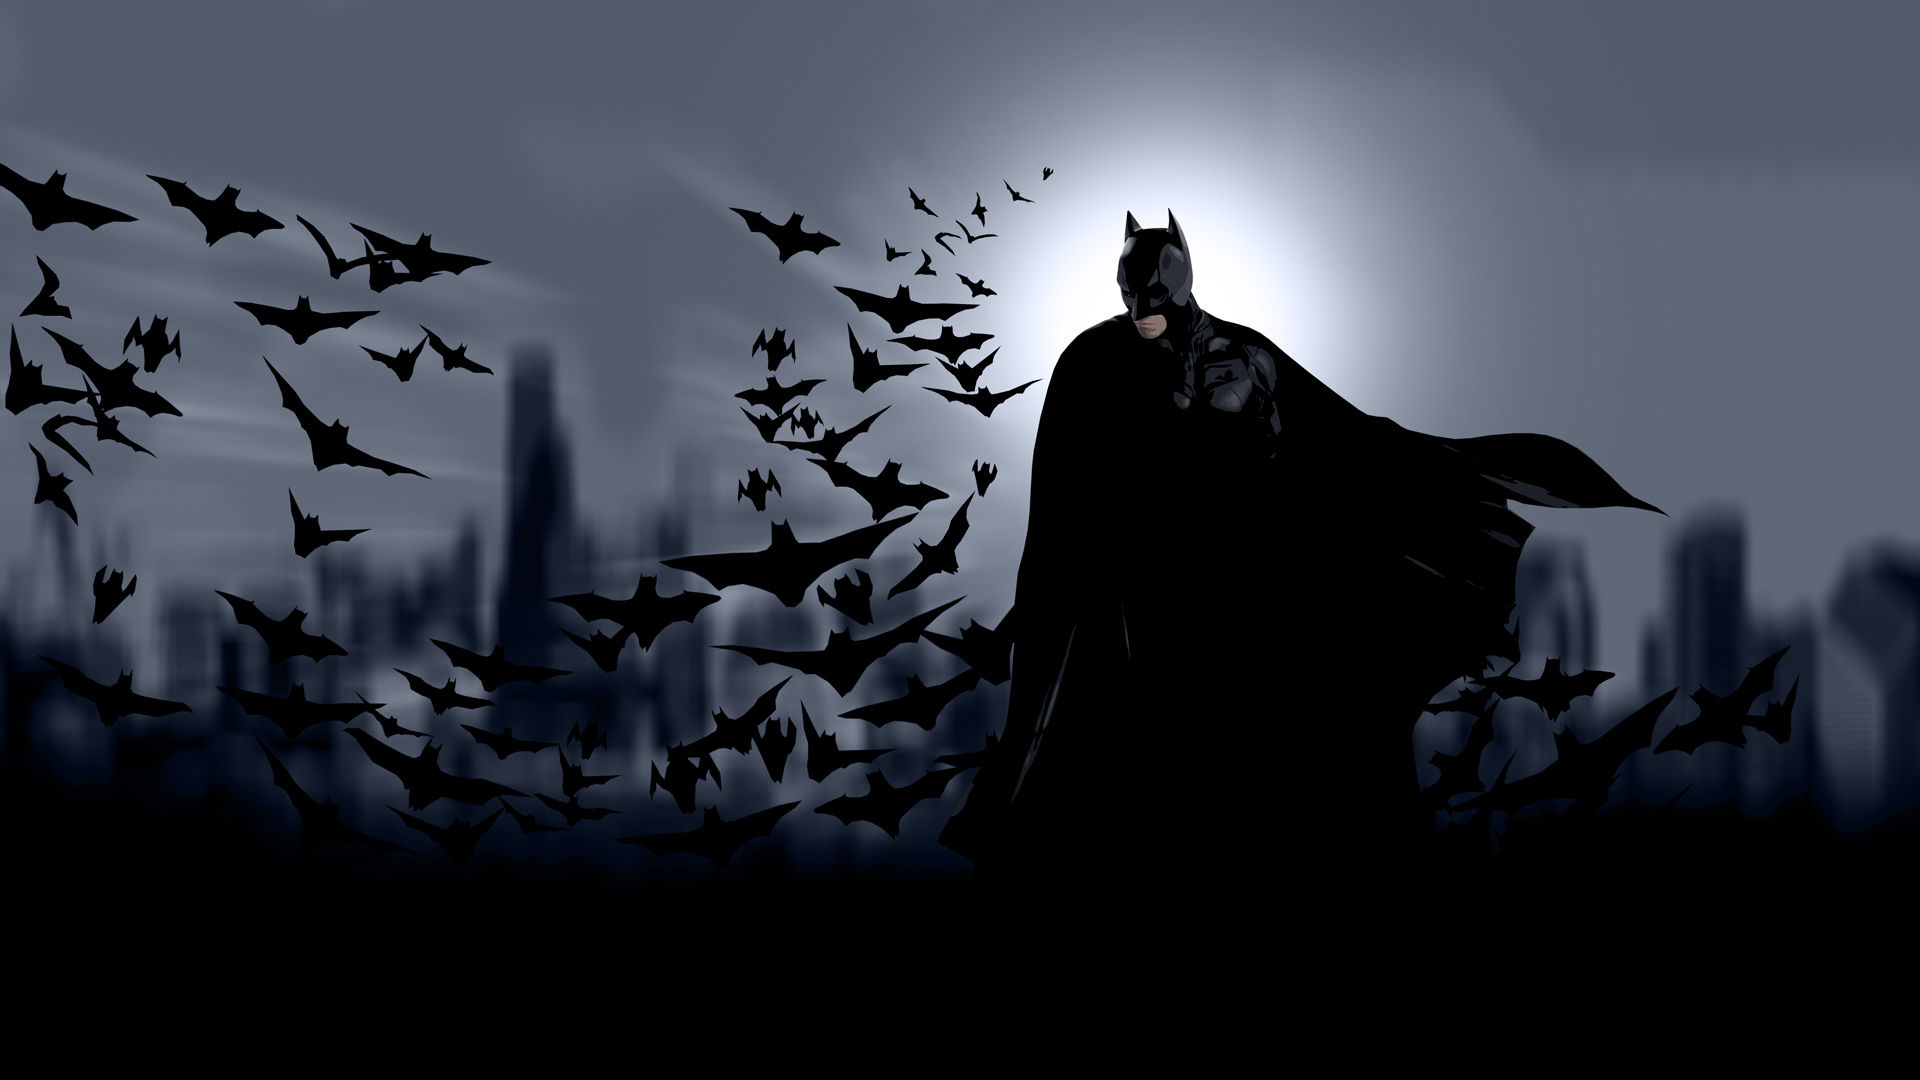 Enjoy our wallpaper of the week Batman Batman wallpapers